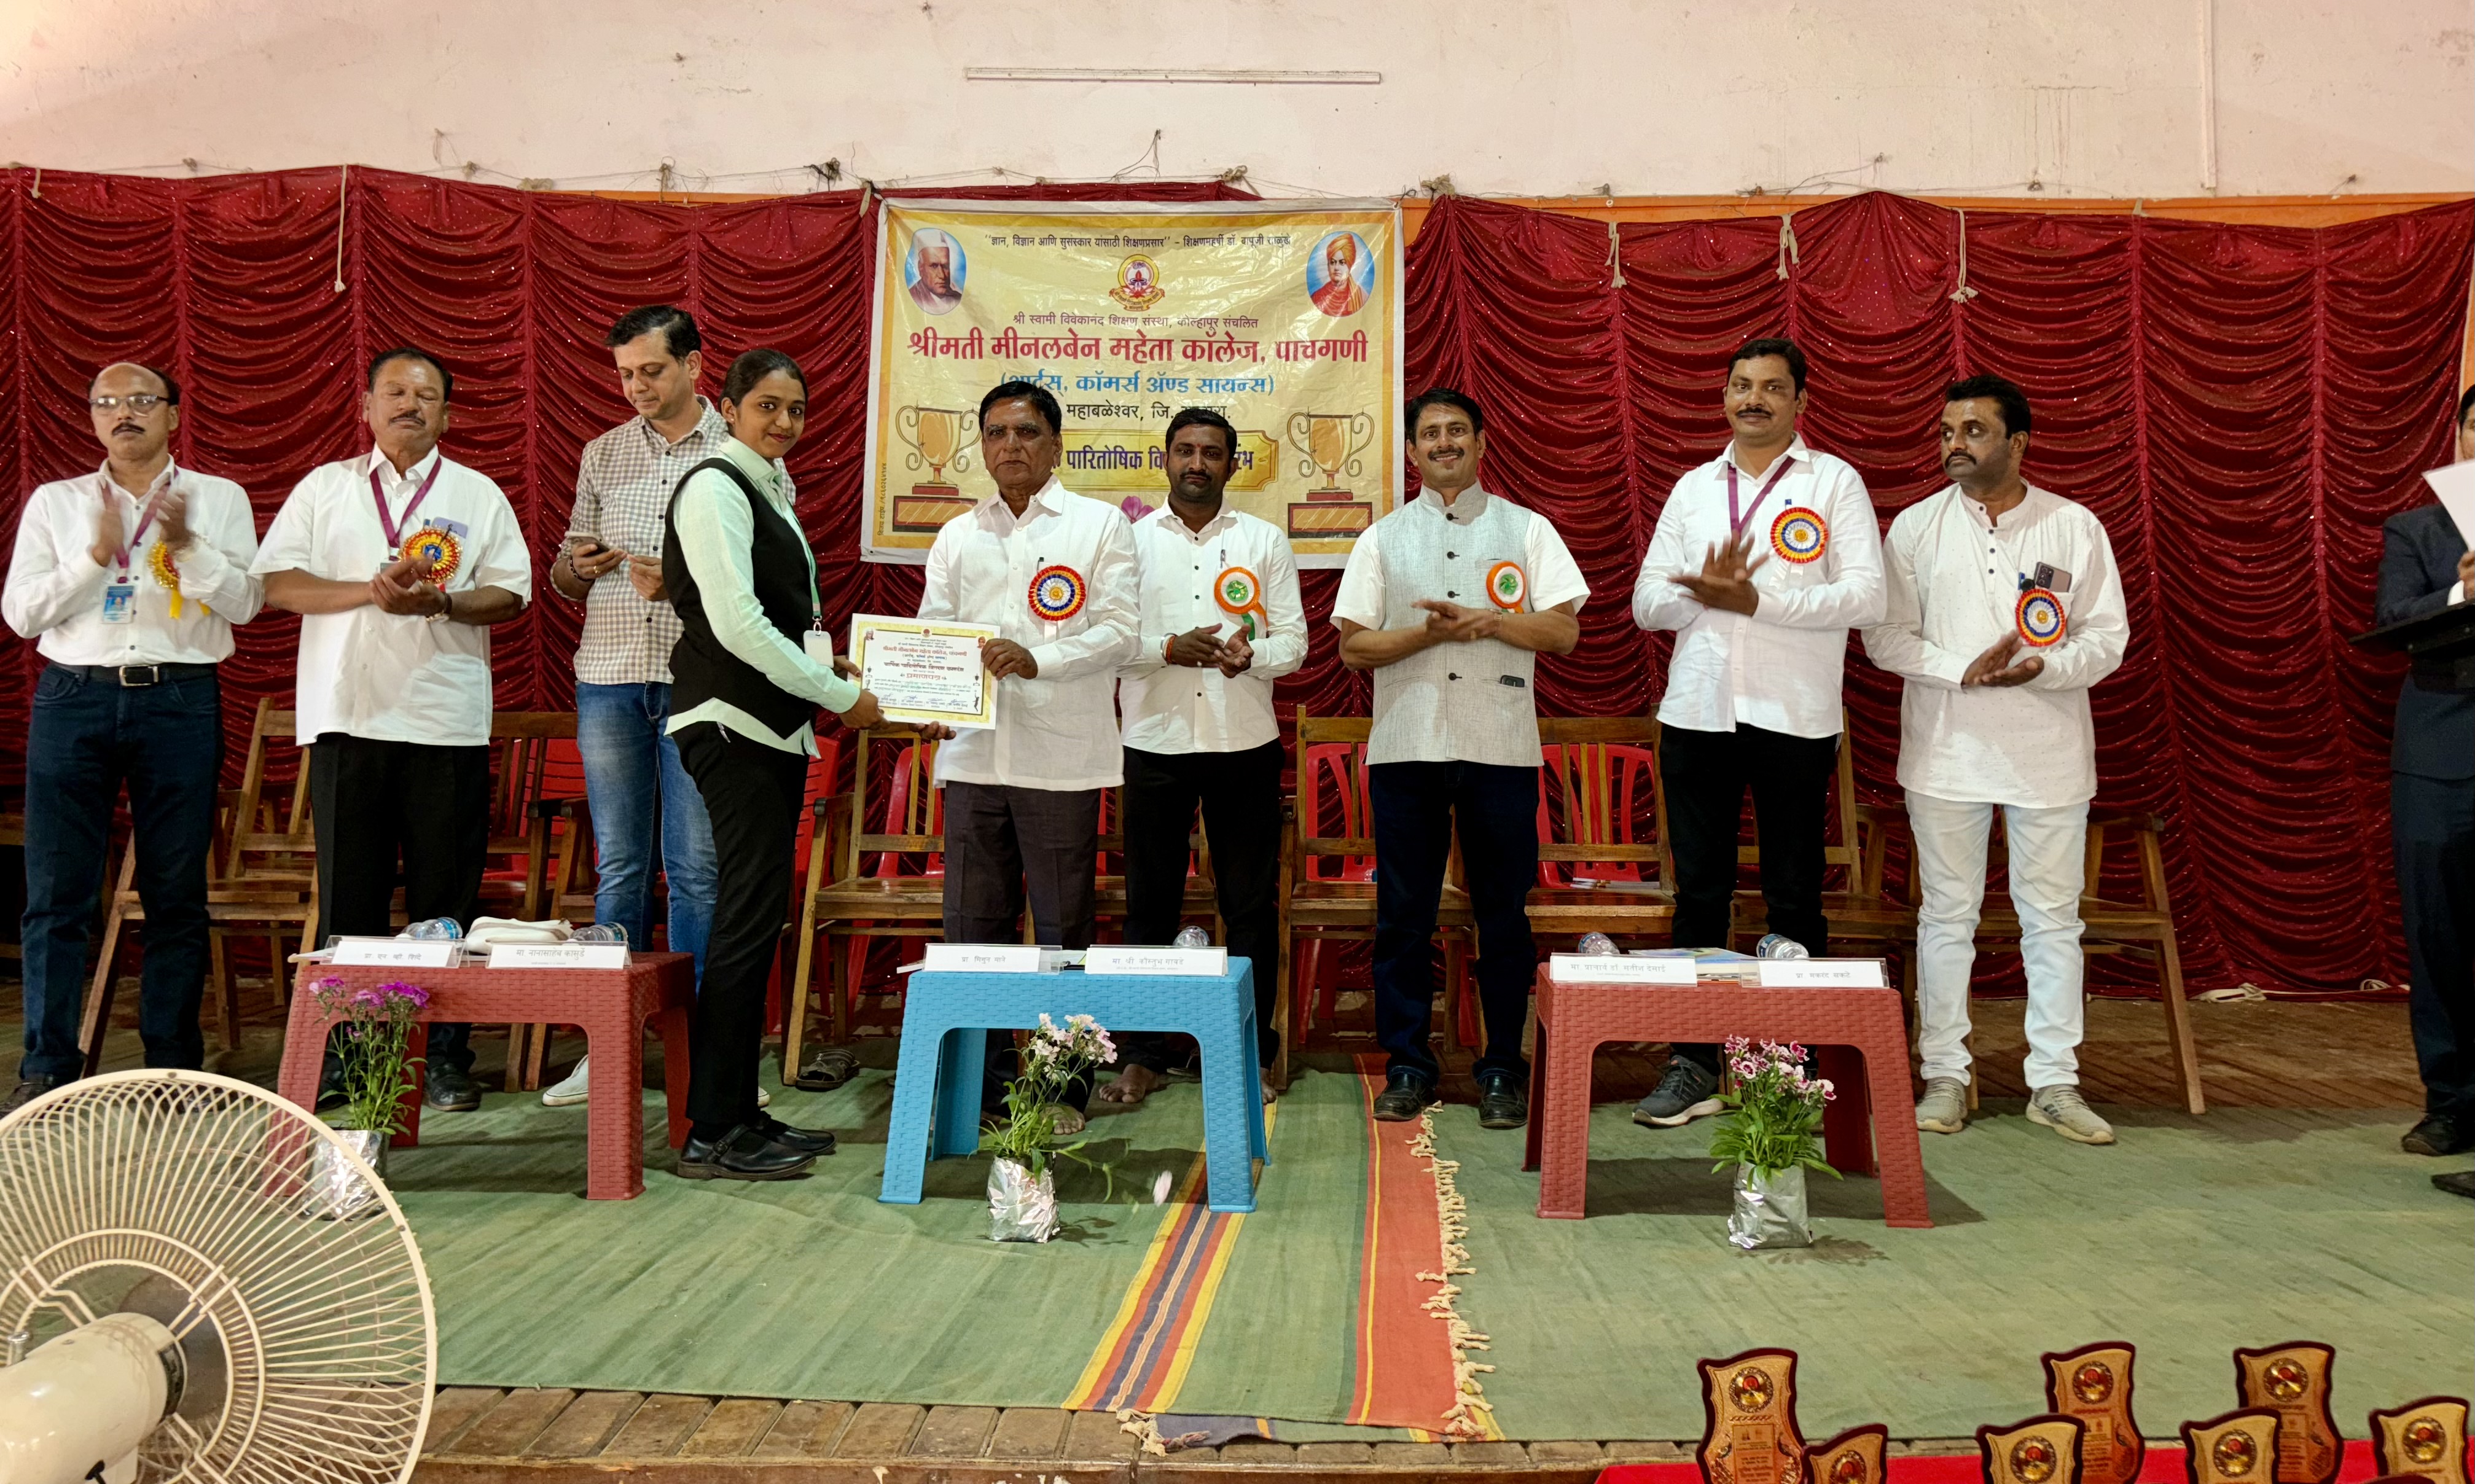 Annual Prize Distribution Ceremony